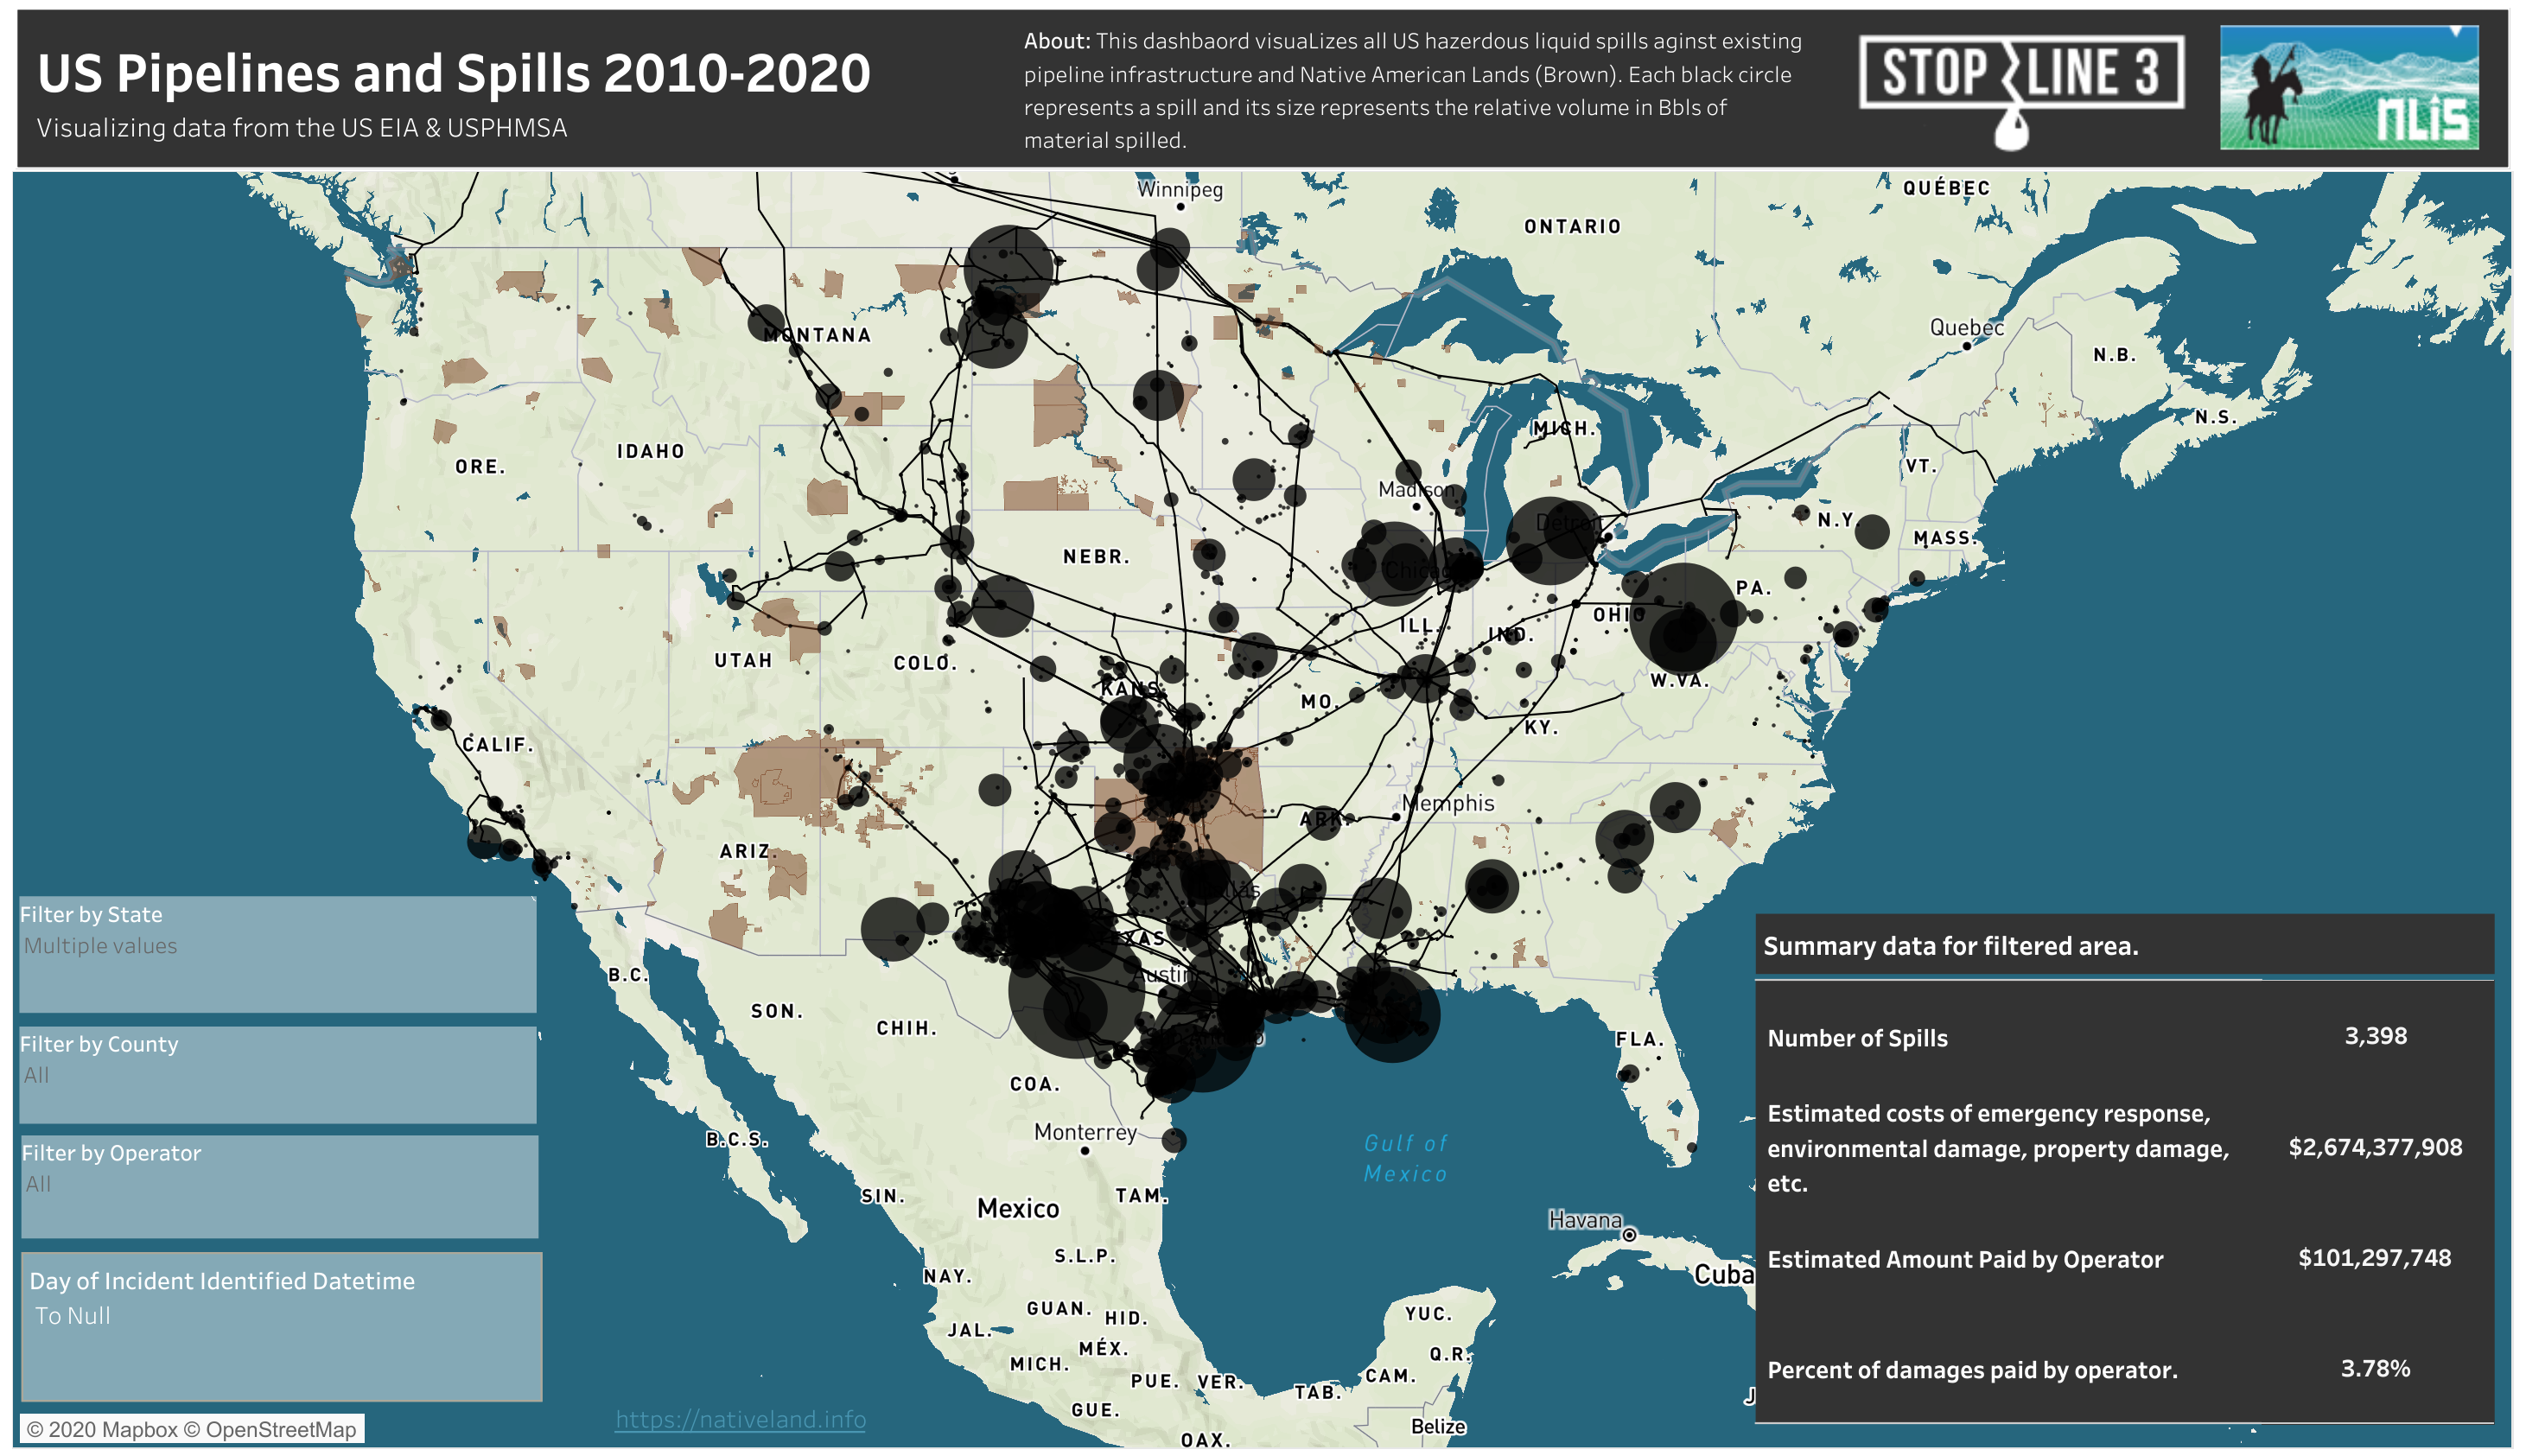 US Pipelines and Hazardous Liquid Spills 2010-2020